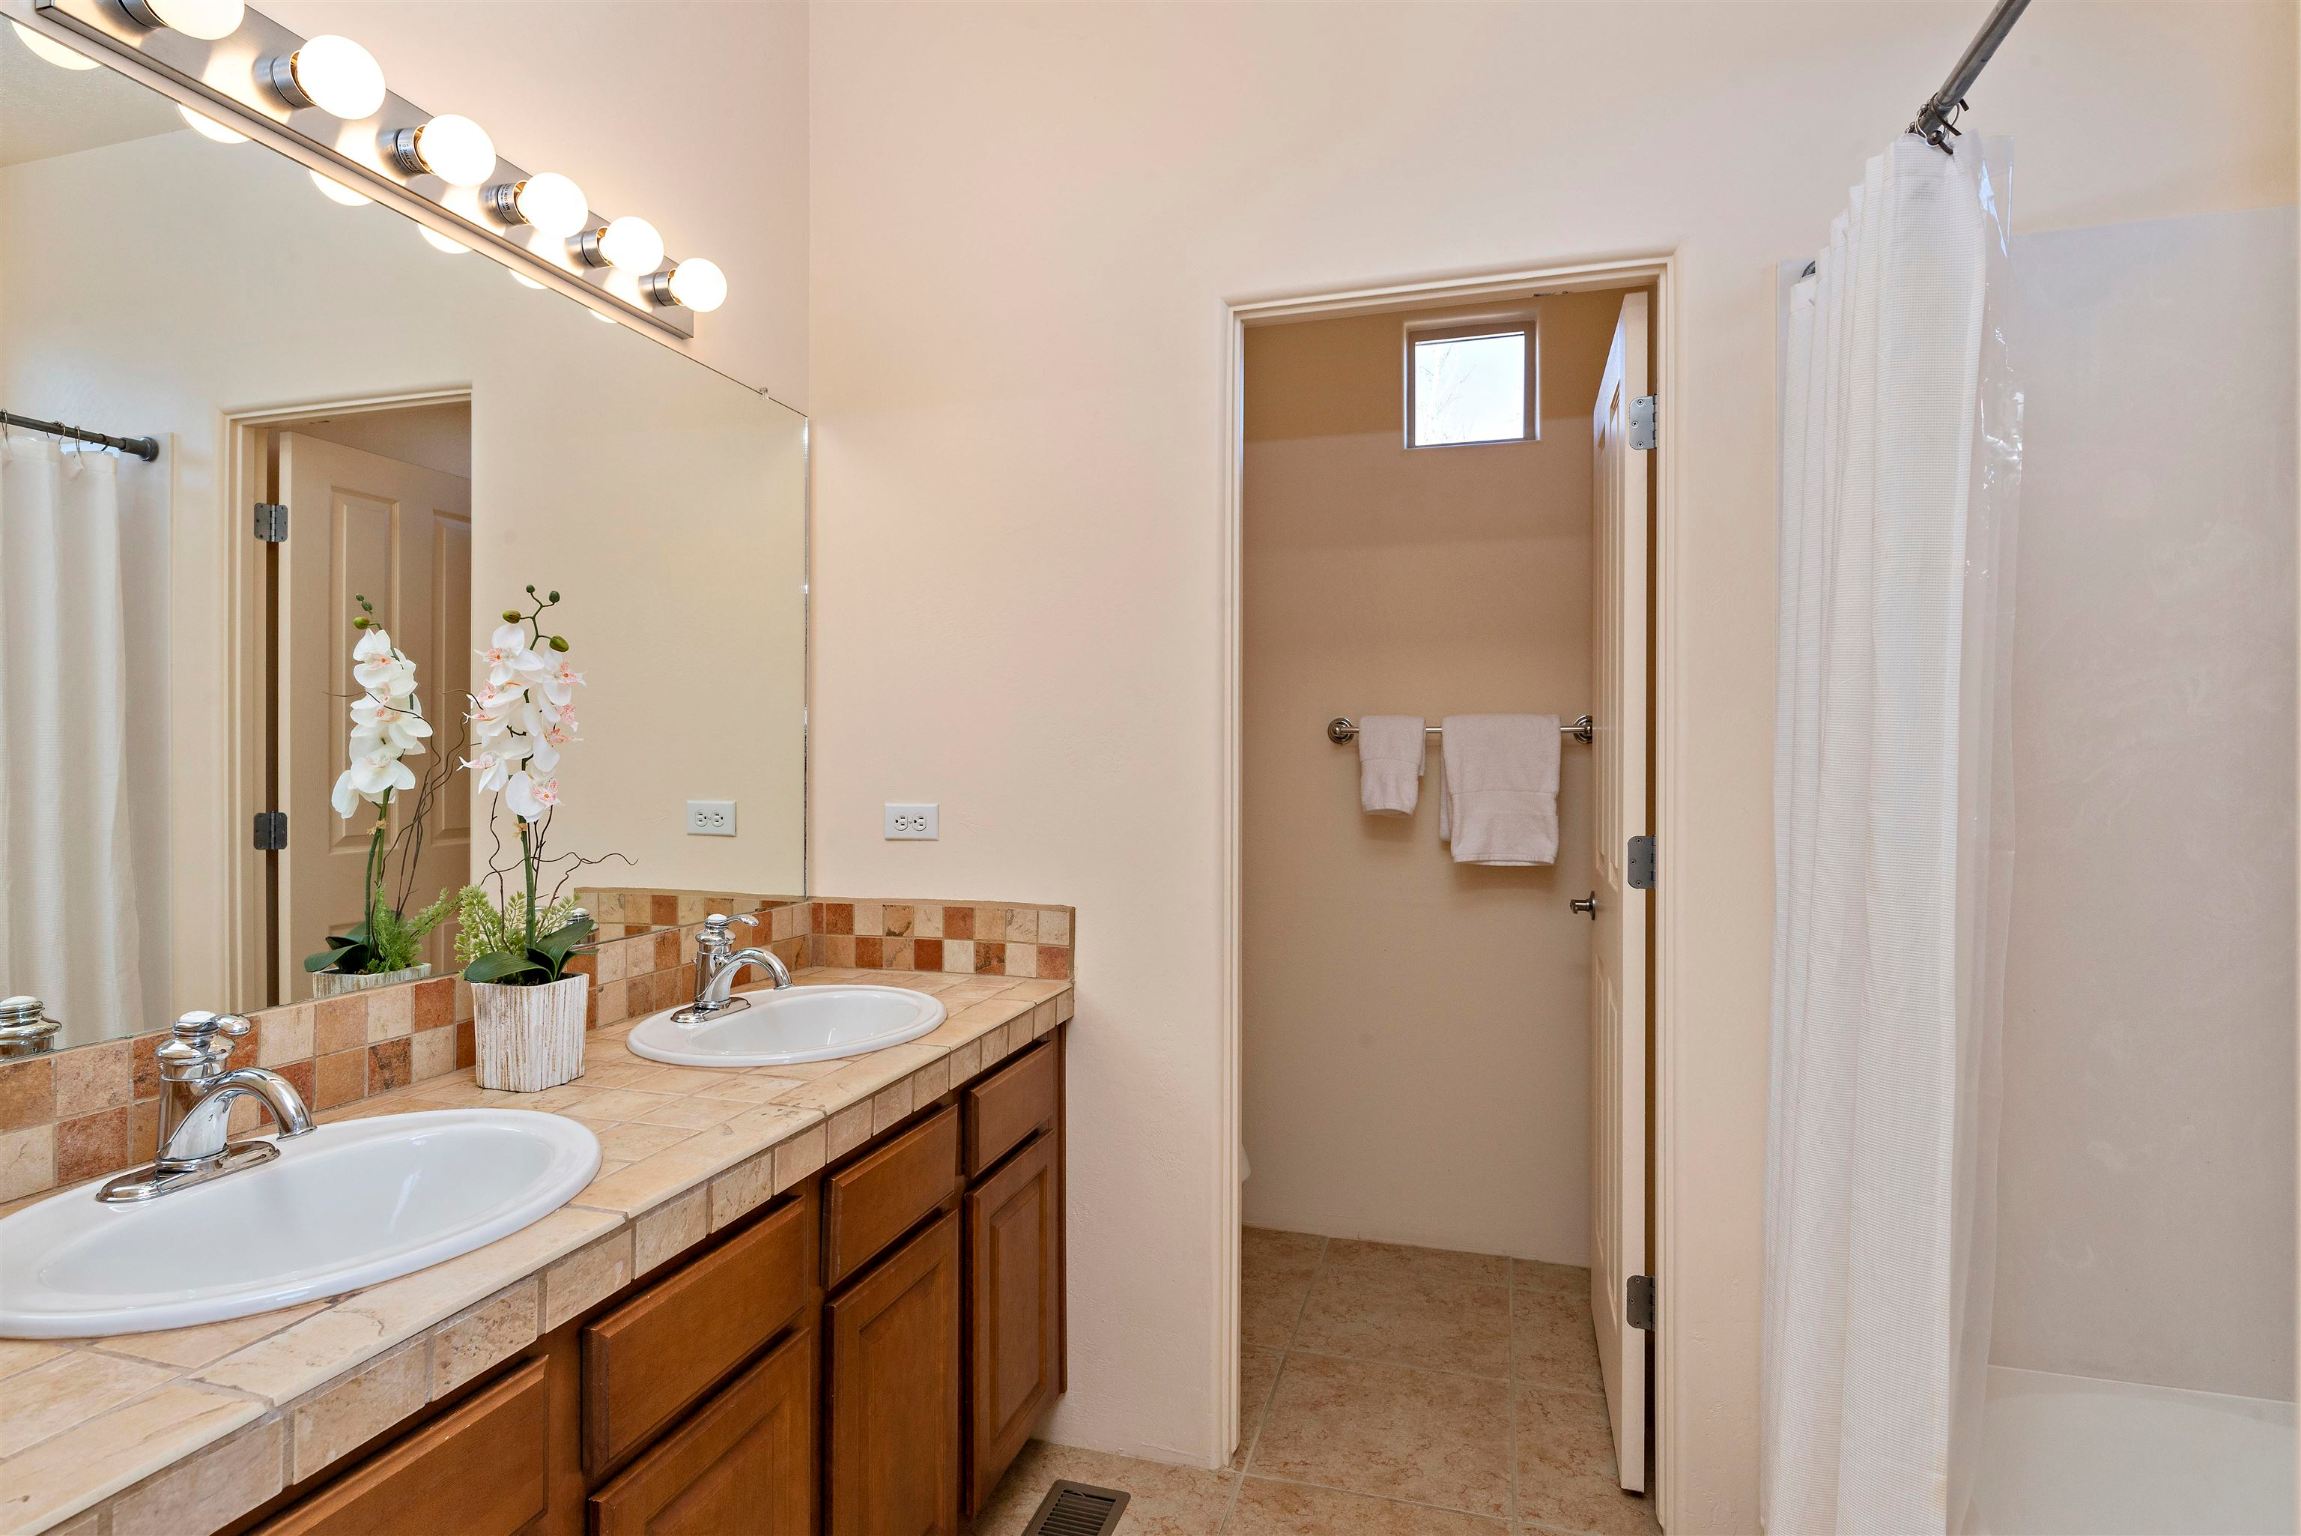 25 Johnson Mesa, Santa Fe, New Mexico 87508, 2 Bedrooms Bedrooms, ,3 BathroomsBathrooms,Residential,For Sale,25 Johnson Mesa,202200956